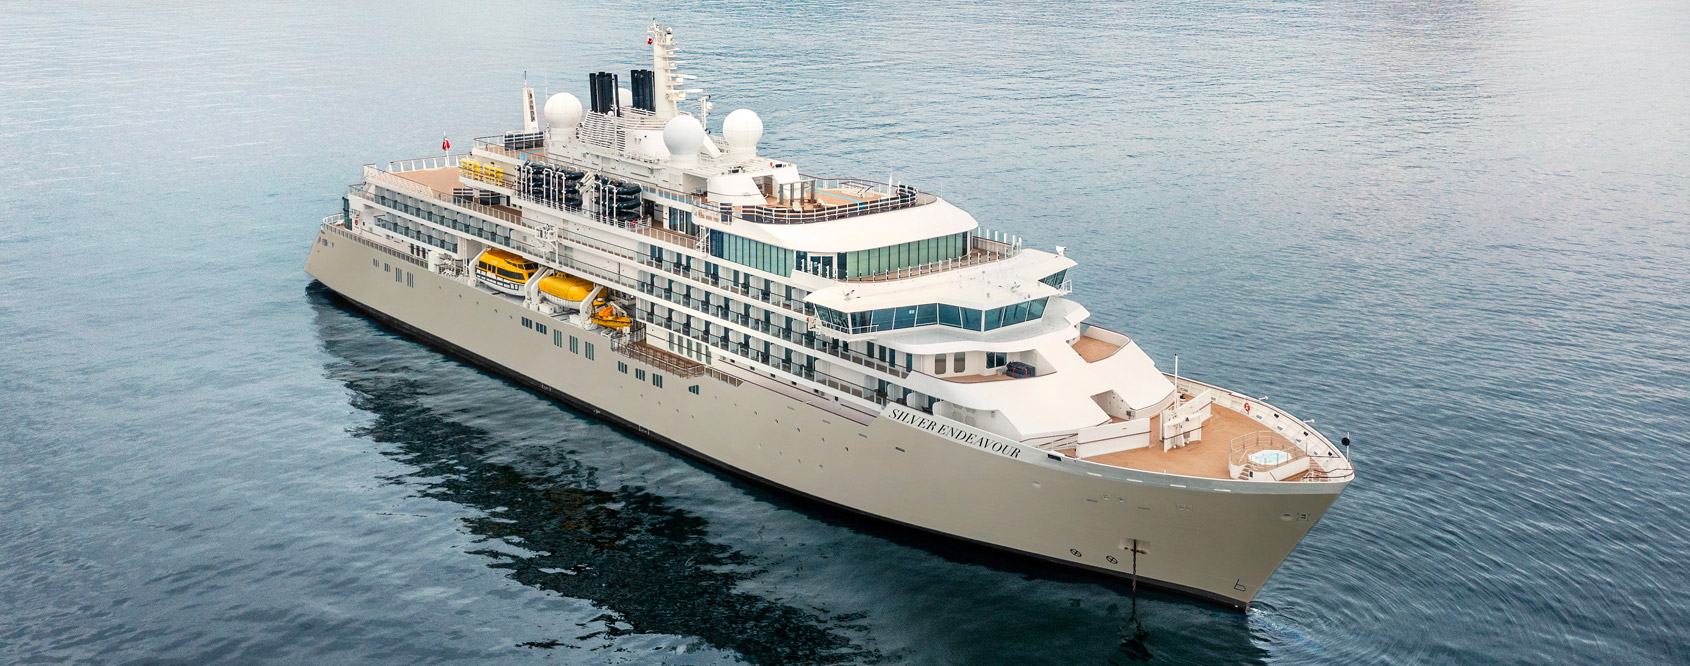 Silversea Cruises Main Image